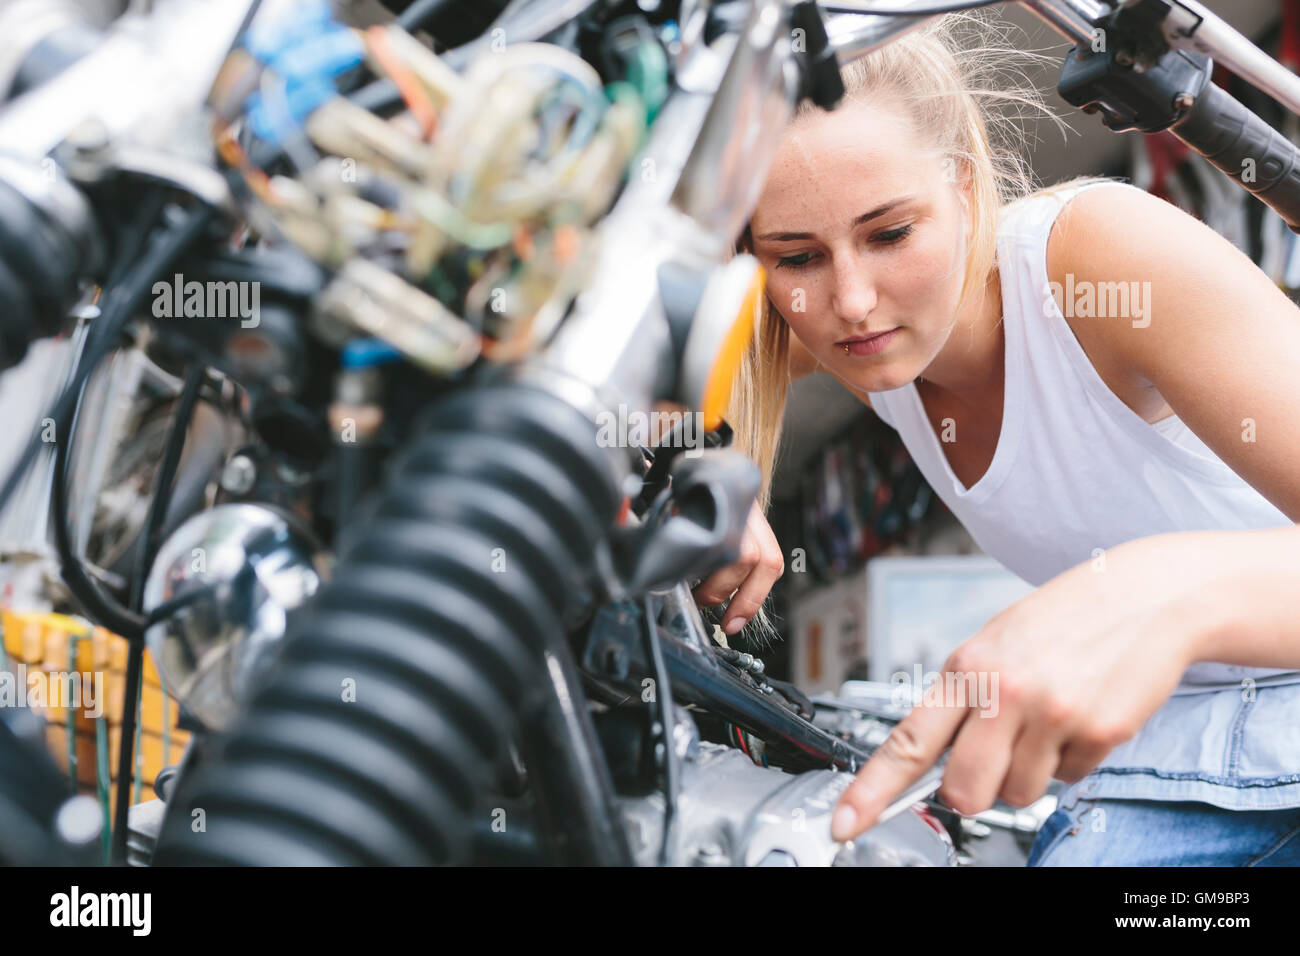 Young woman examining motorbike Stock Photo